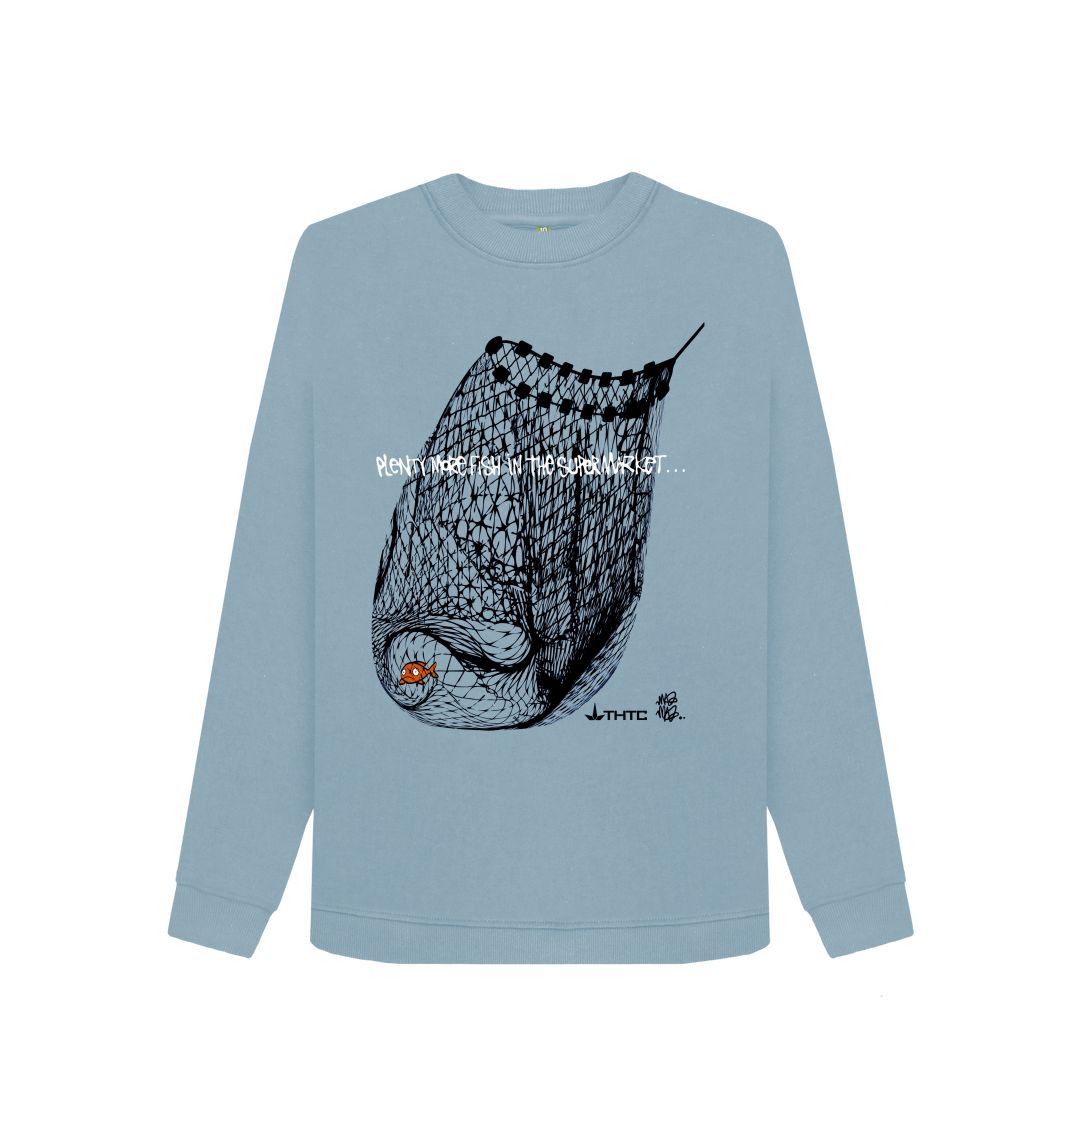 Plenty More Fish Women's Sweater | Organic Clothing